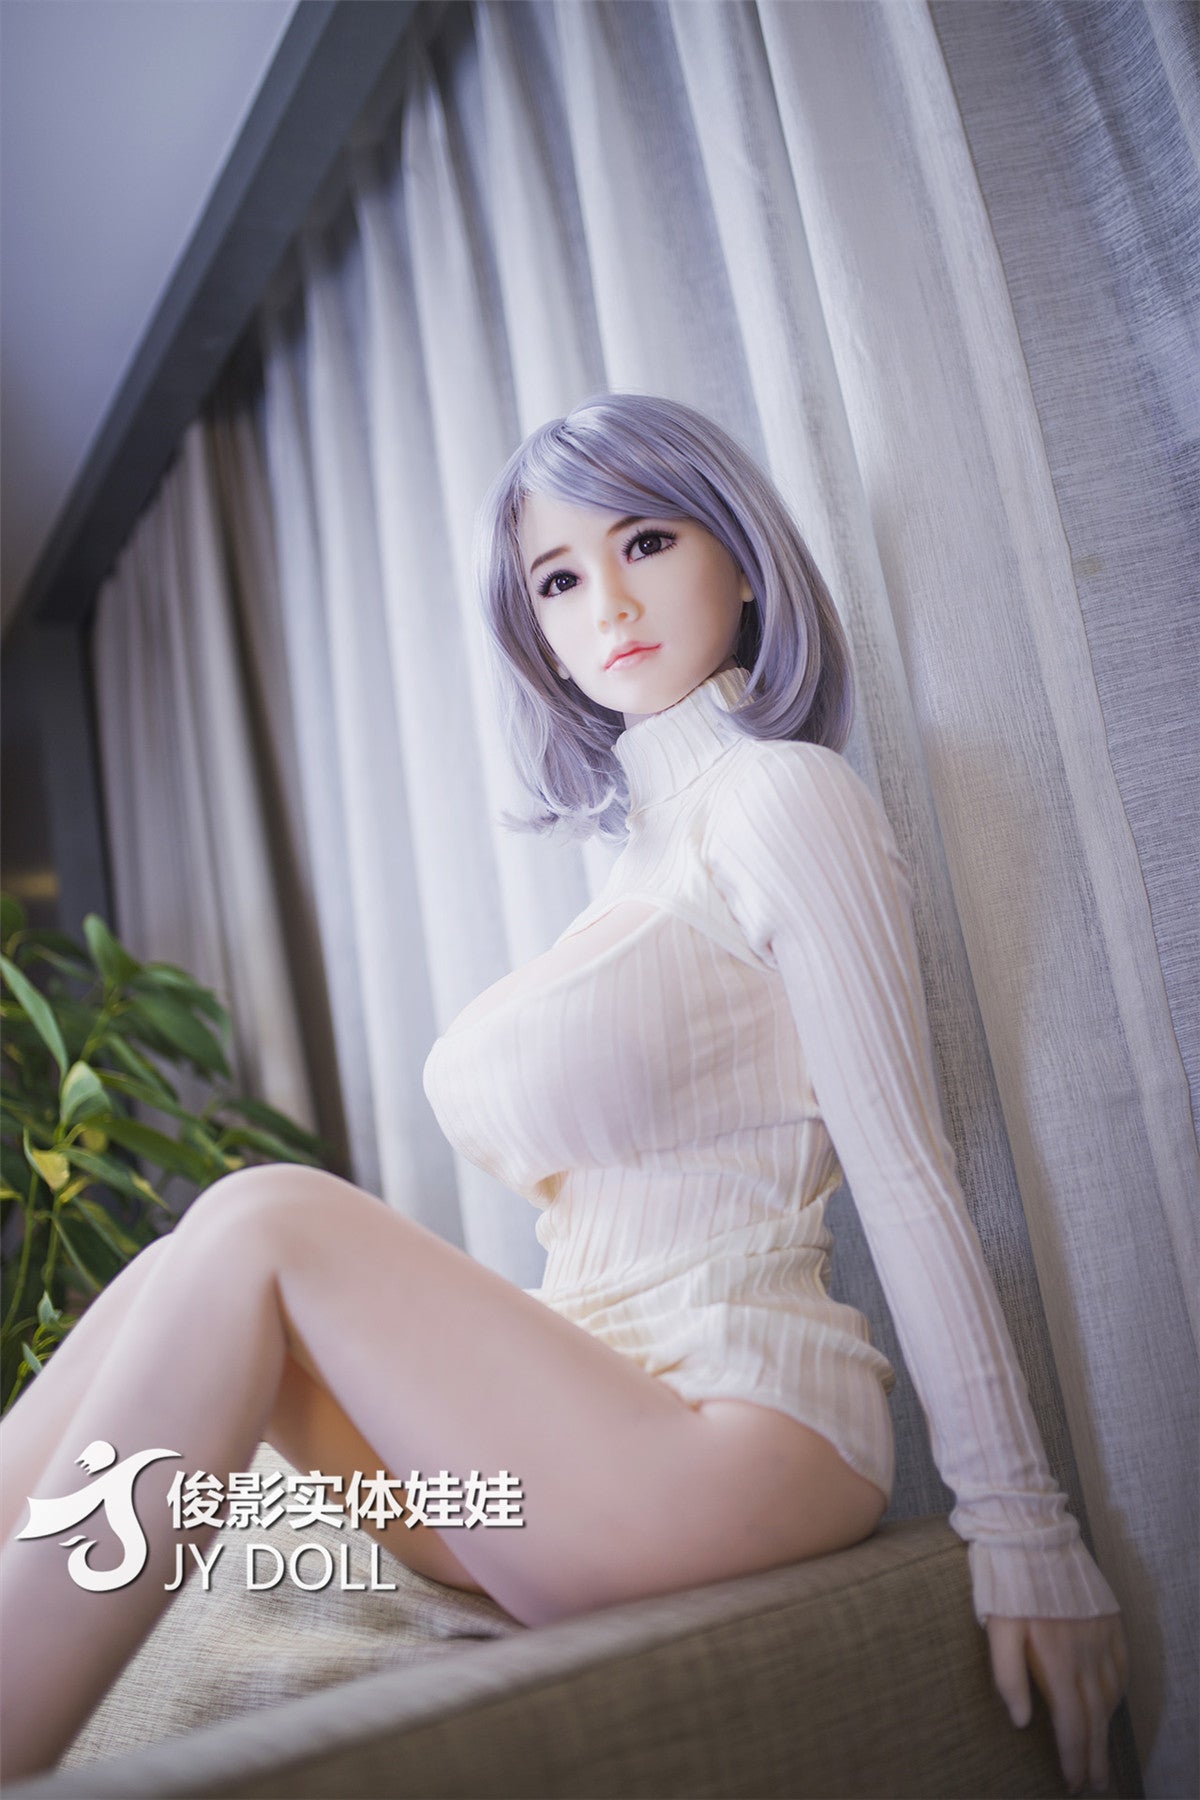 JY Doll 163 cm TPE - YiTing (SG) | Buy Sex Dolls at DOLLS ACTUALLY